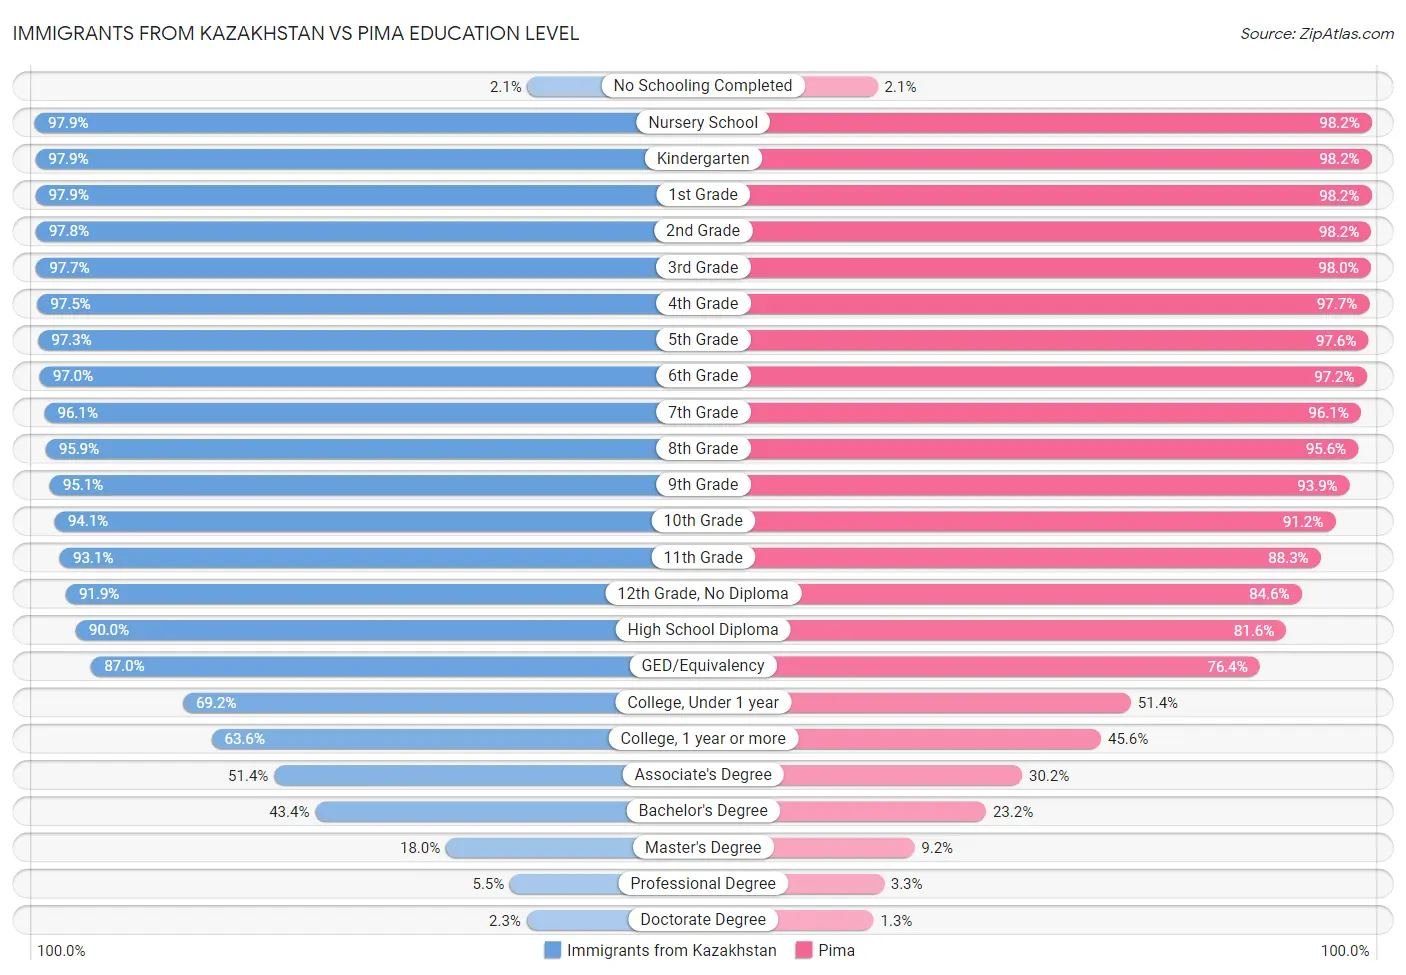 Immigrants from Kazakhstan vs Pima Education Level